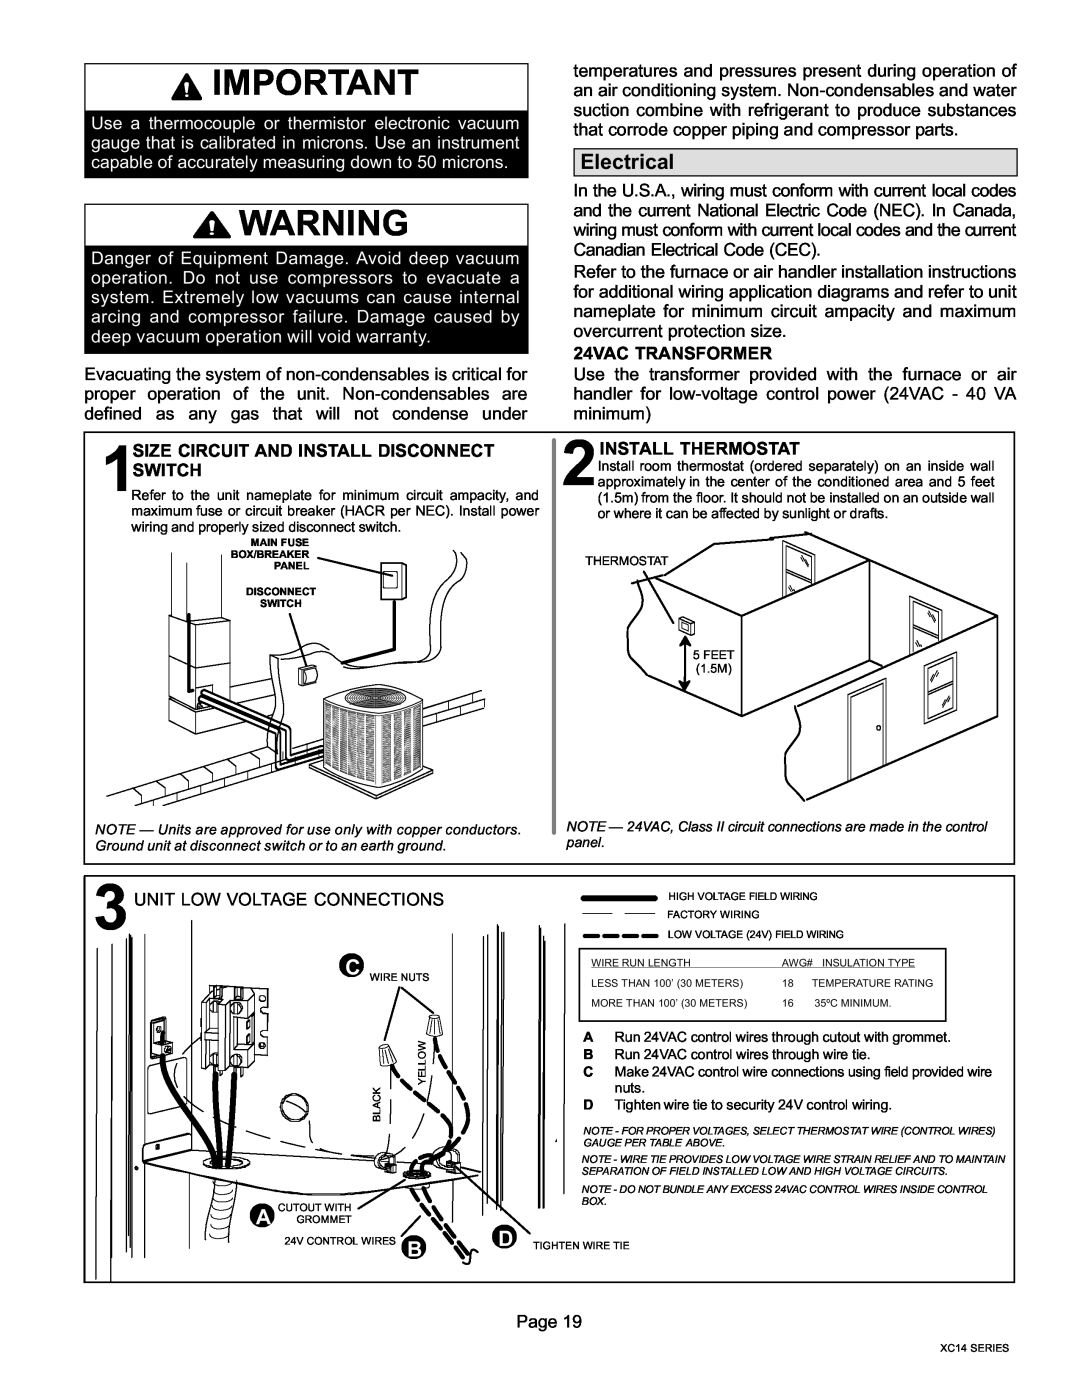 Lenox Elite Series, XC14 installation instructions Electrical 